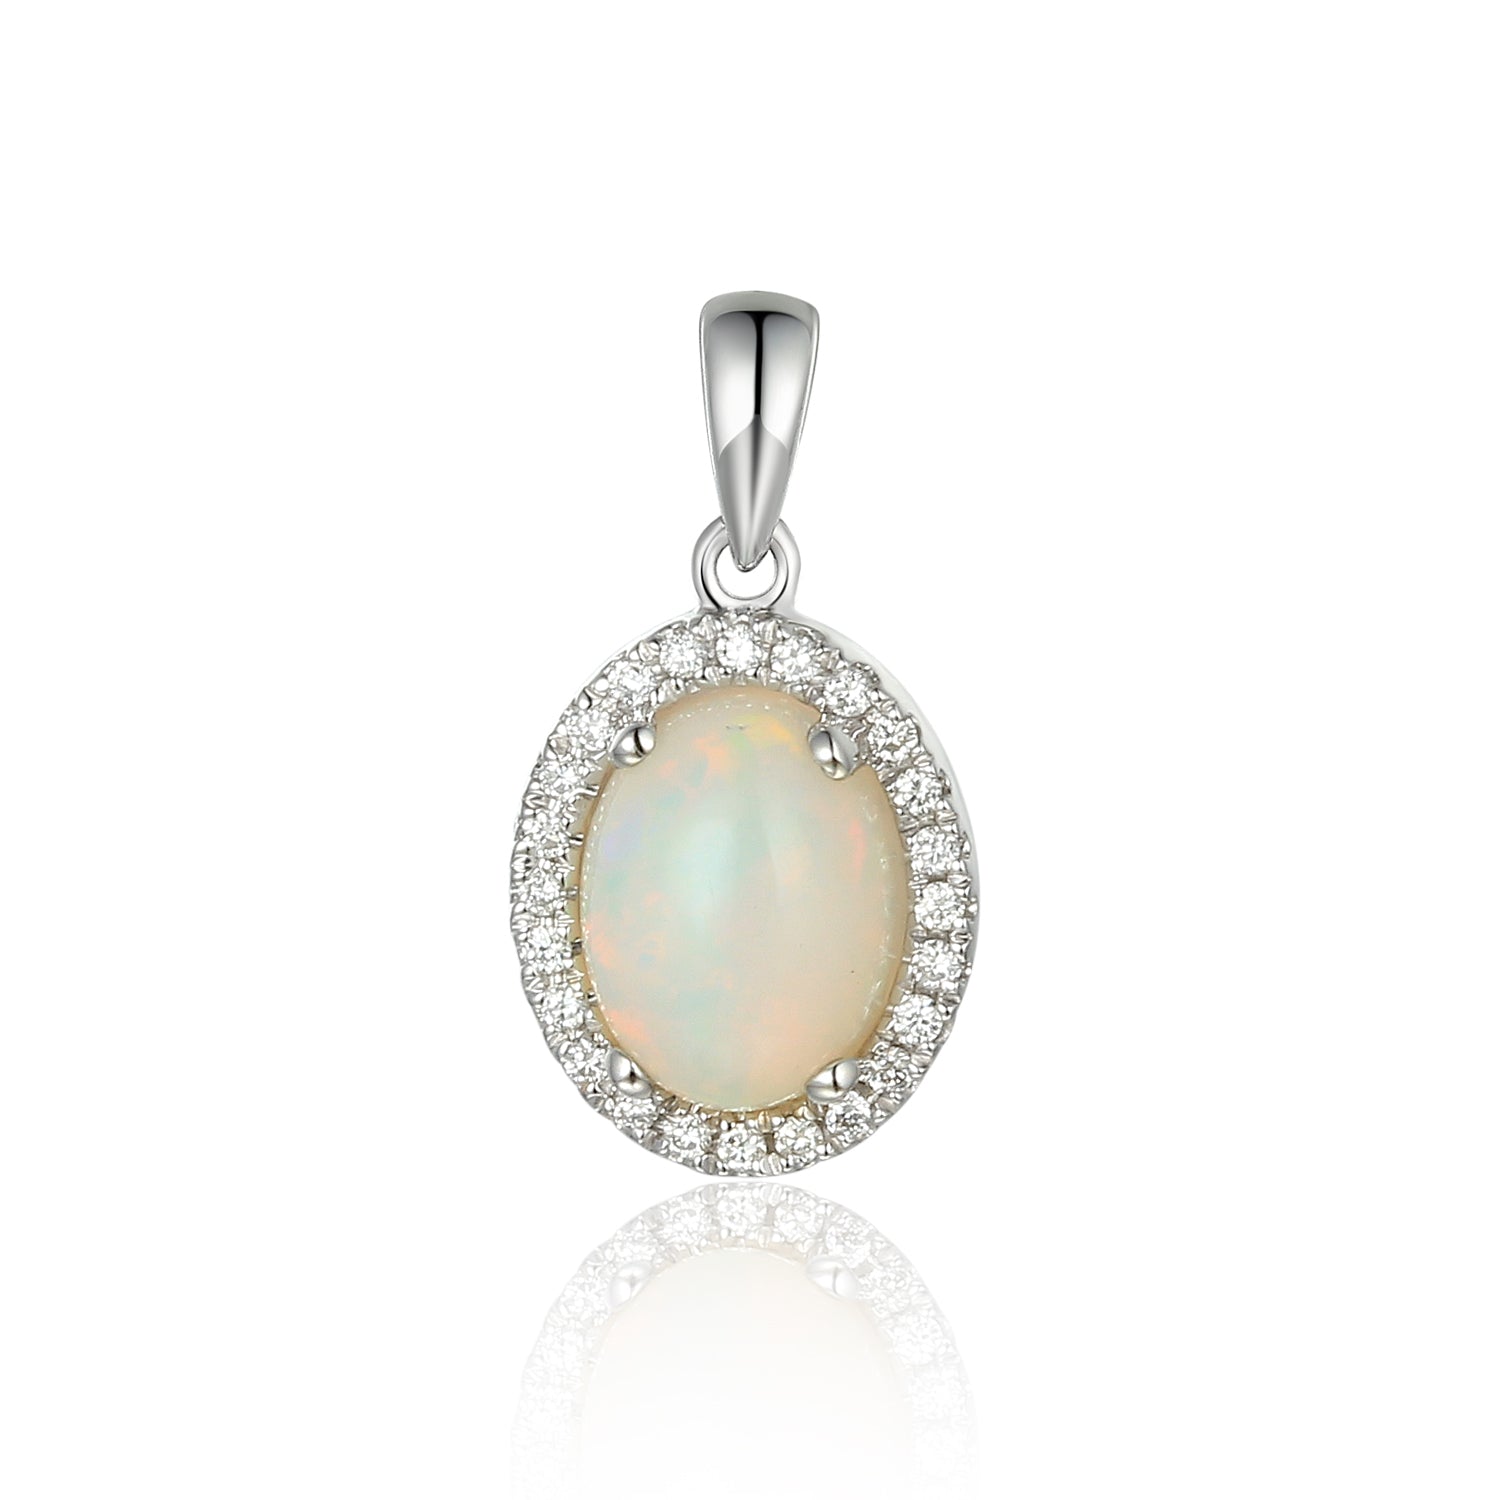 Oval Opal Pendant with a diamond surround